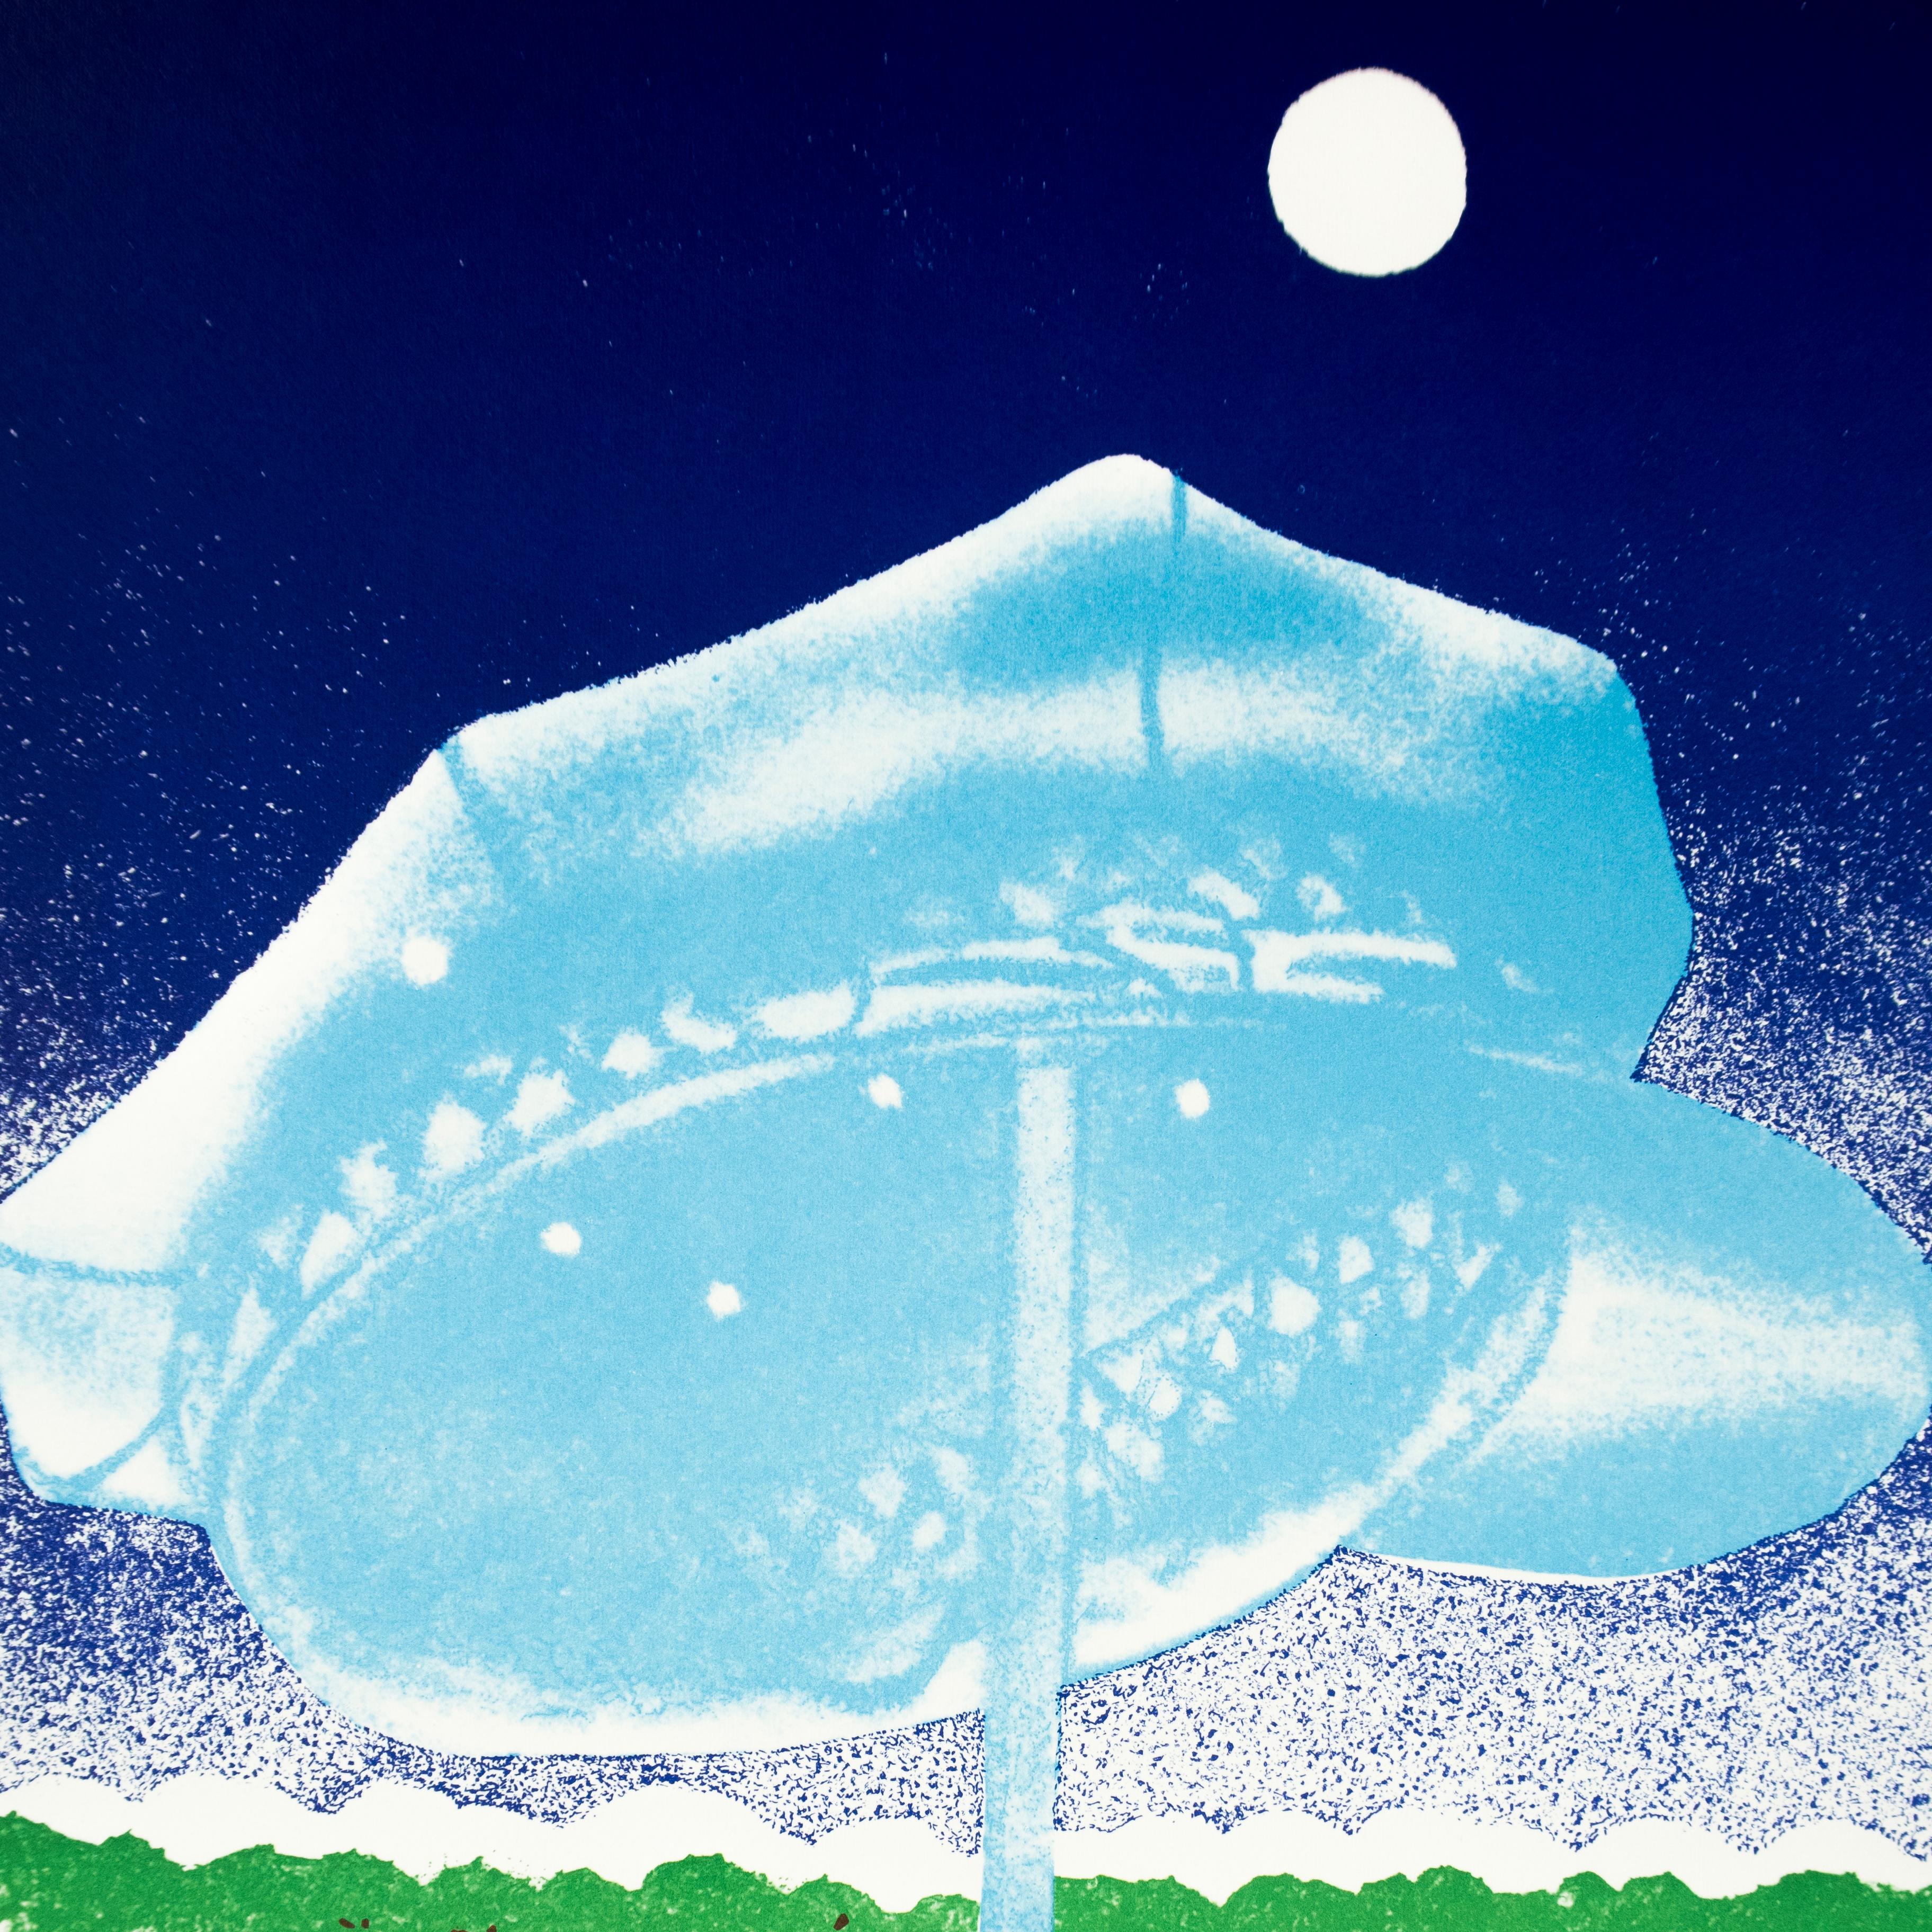 James Rosenquist Vintage Poster: Galleria del Milione 1972 full moon landscape 2